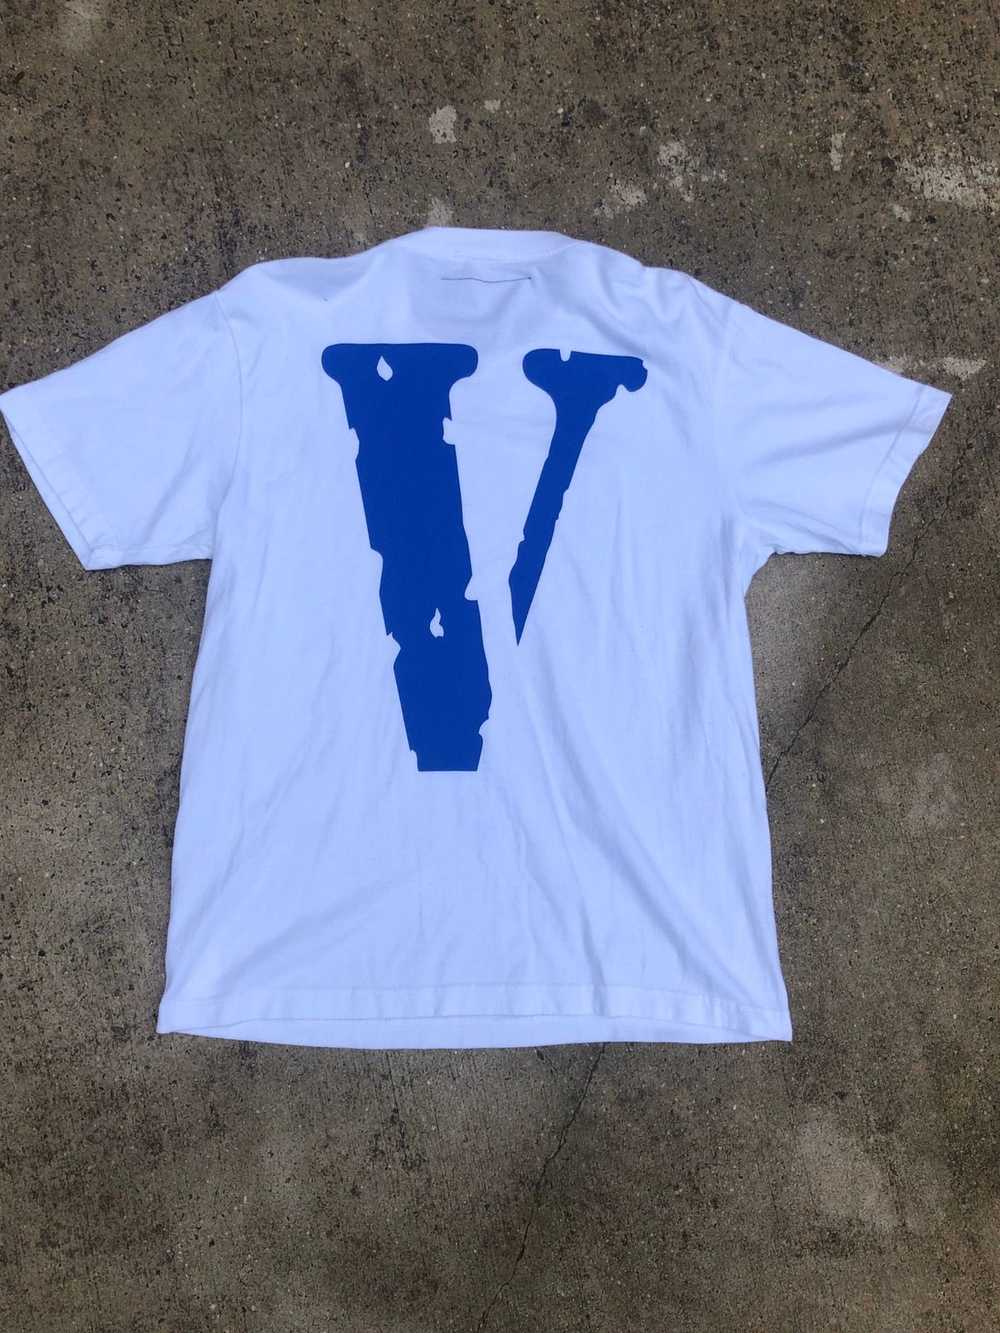 Vlone Vlone T-Shirt - image 2